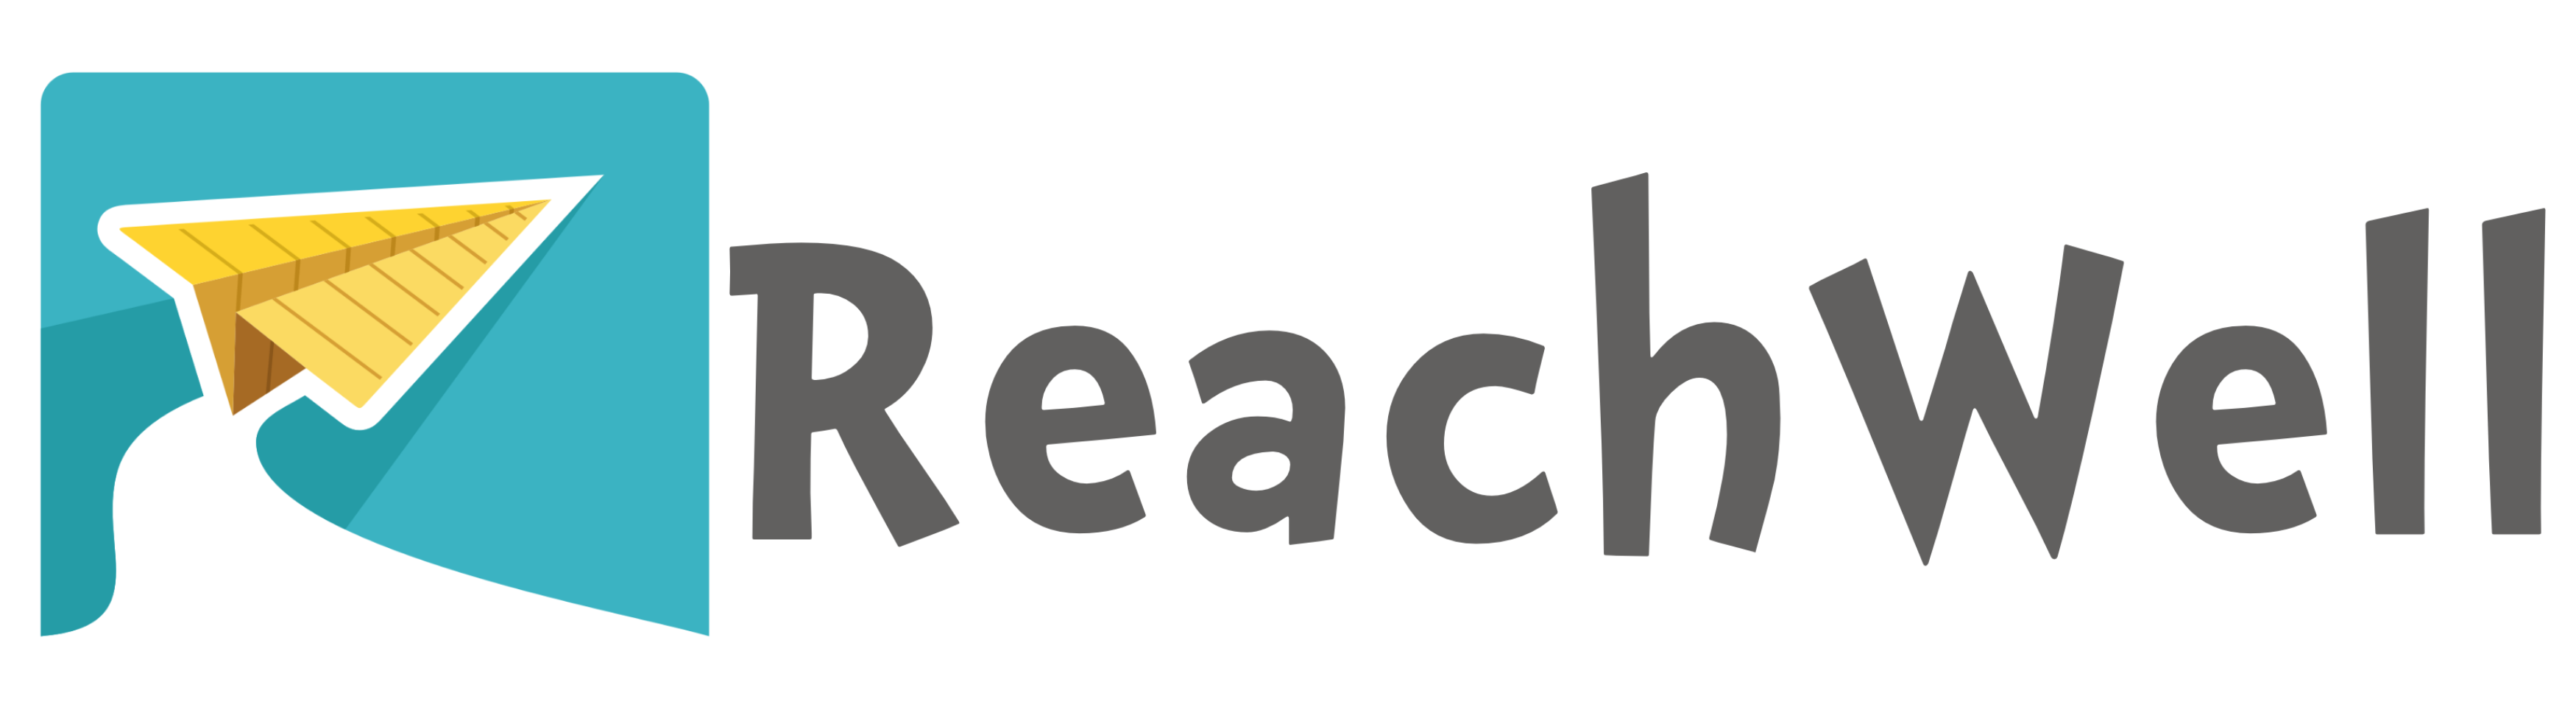 Reach Well logo